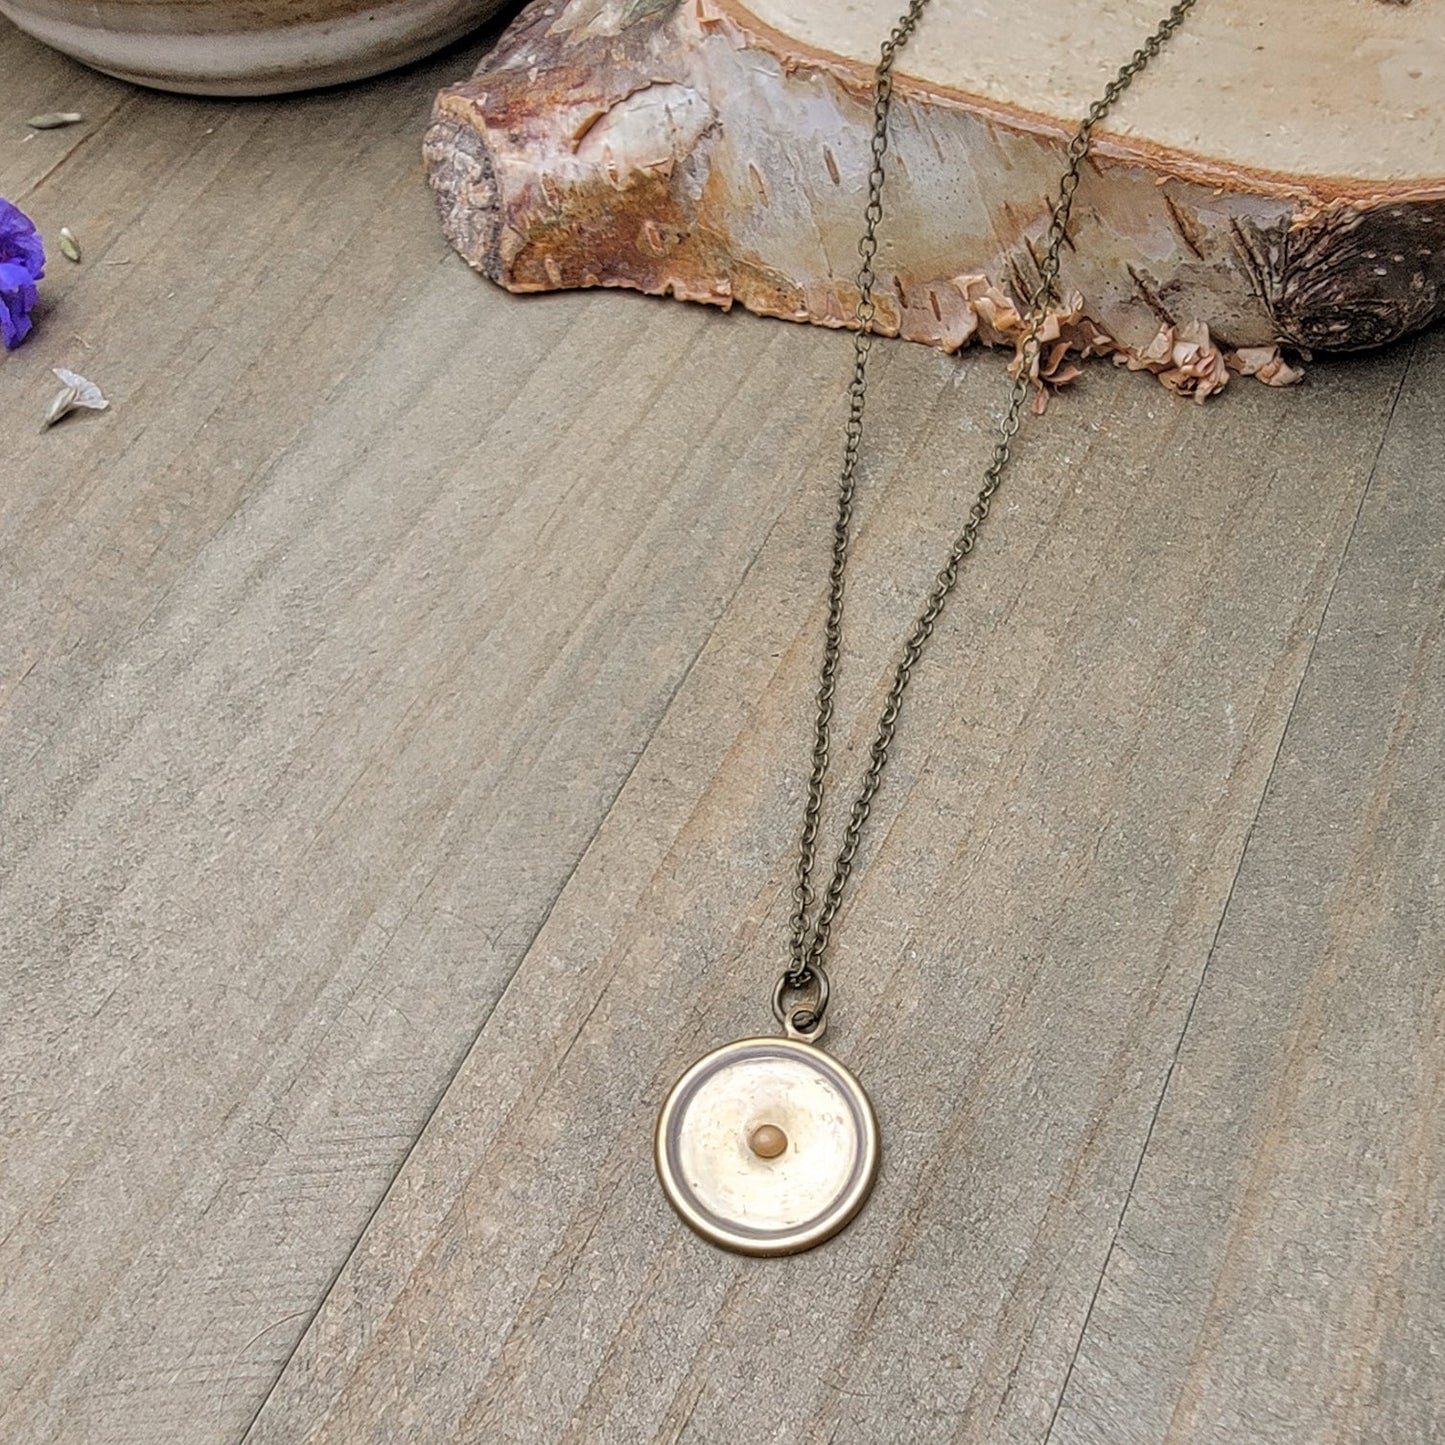 Mustard Seed of Faith Necklace - Nicki Lynn Jewelry